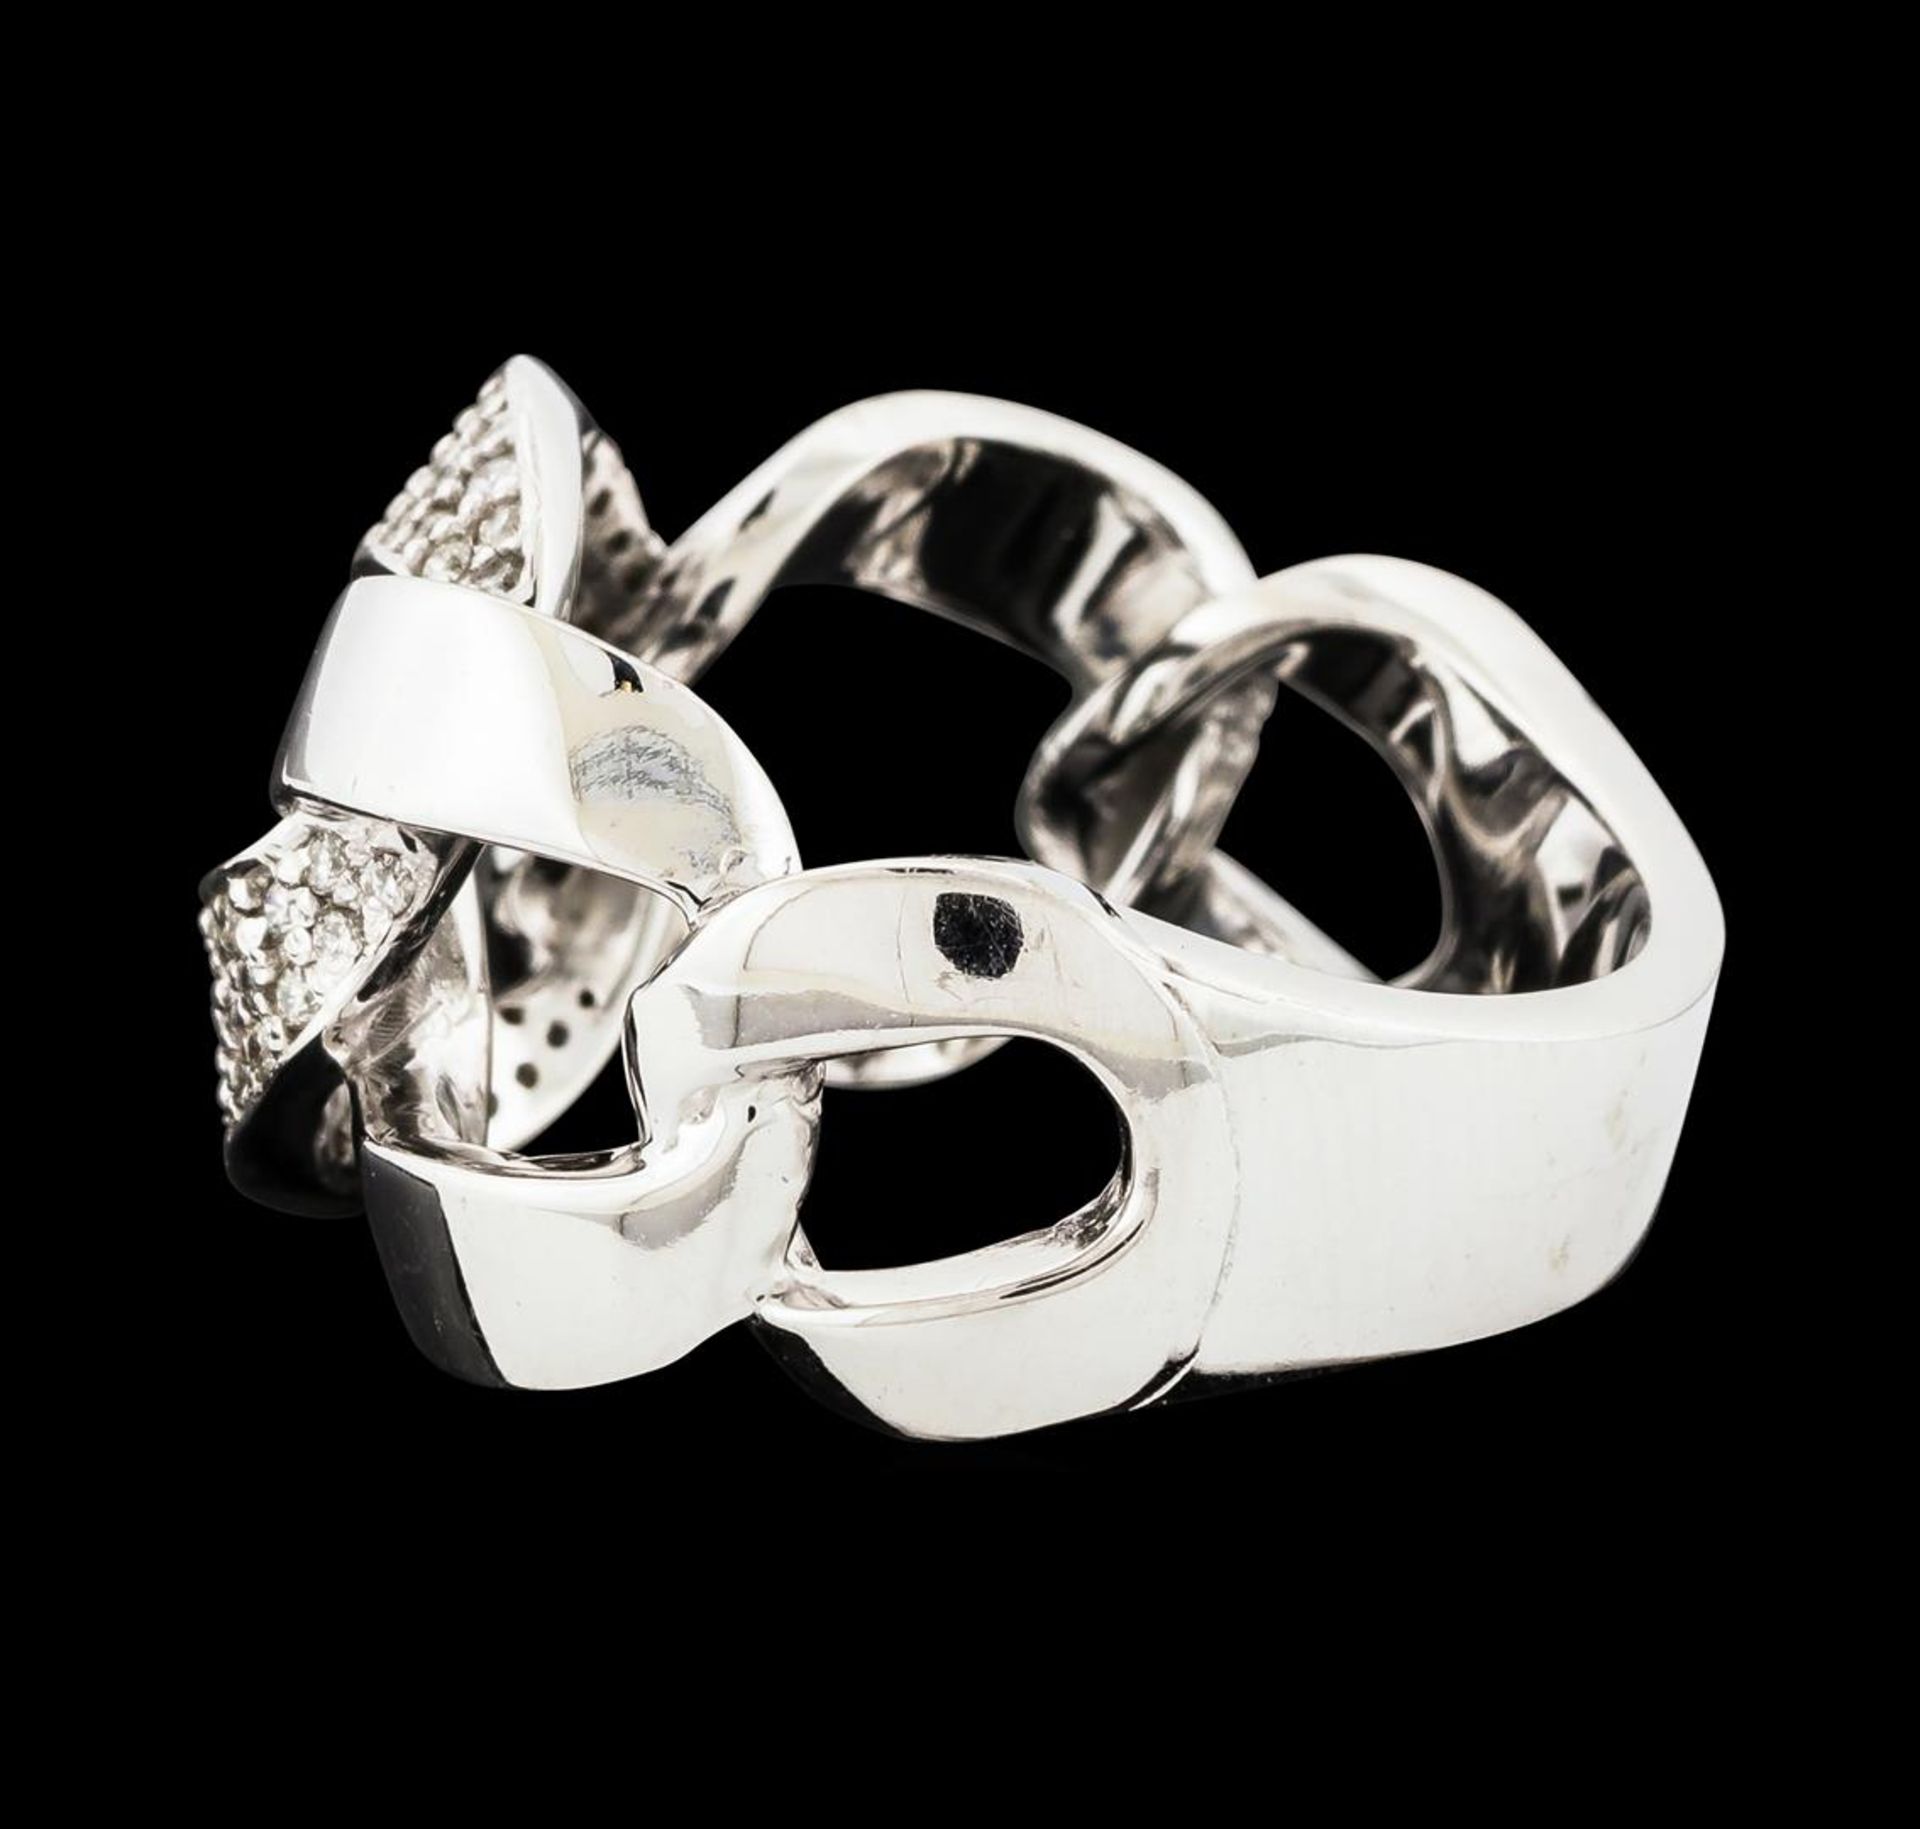 0.33 ctw Diamond Ring - 14KT White Gold - Image 3 of 4